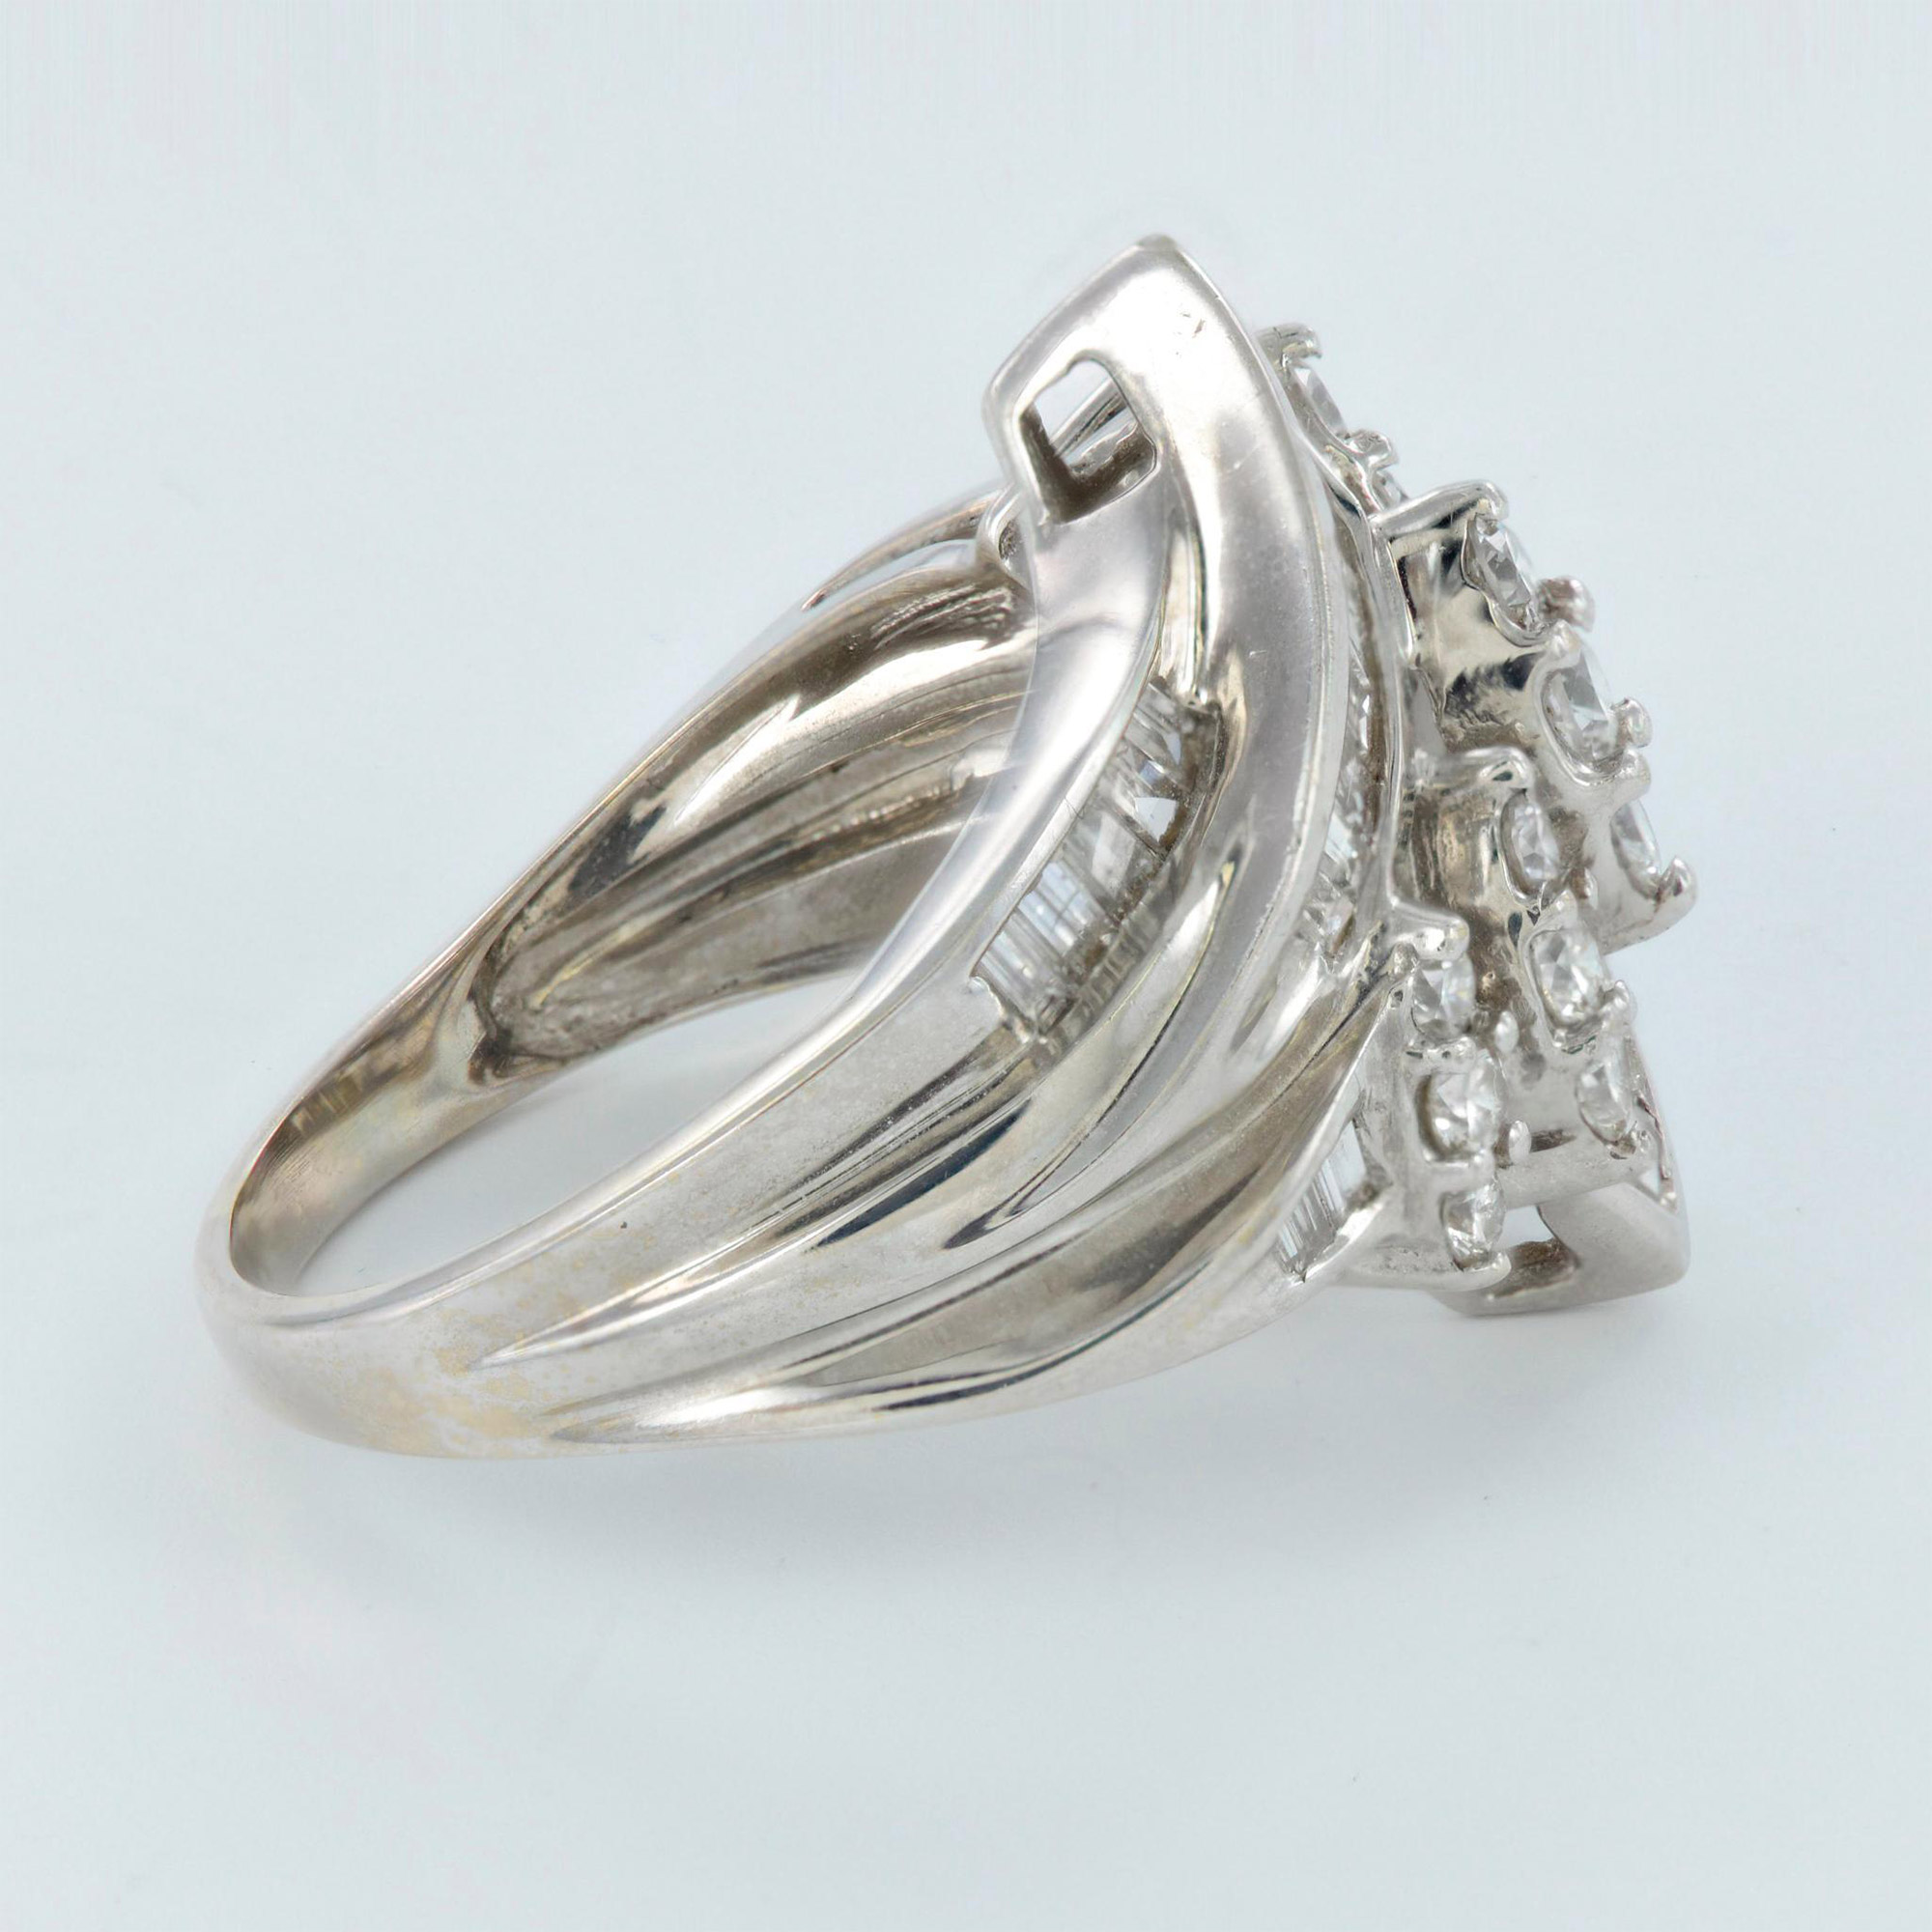 Stunning 18K White Gold and 1.75CTW Diamond Ring - Image 4 of 4